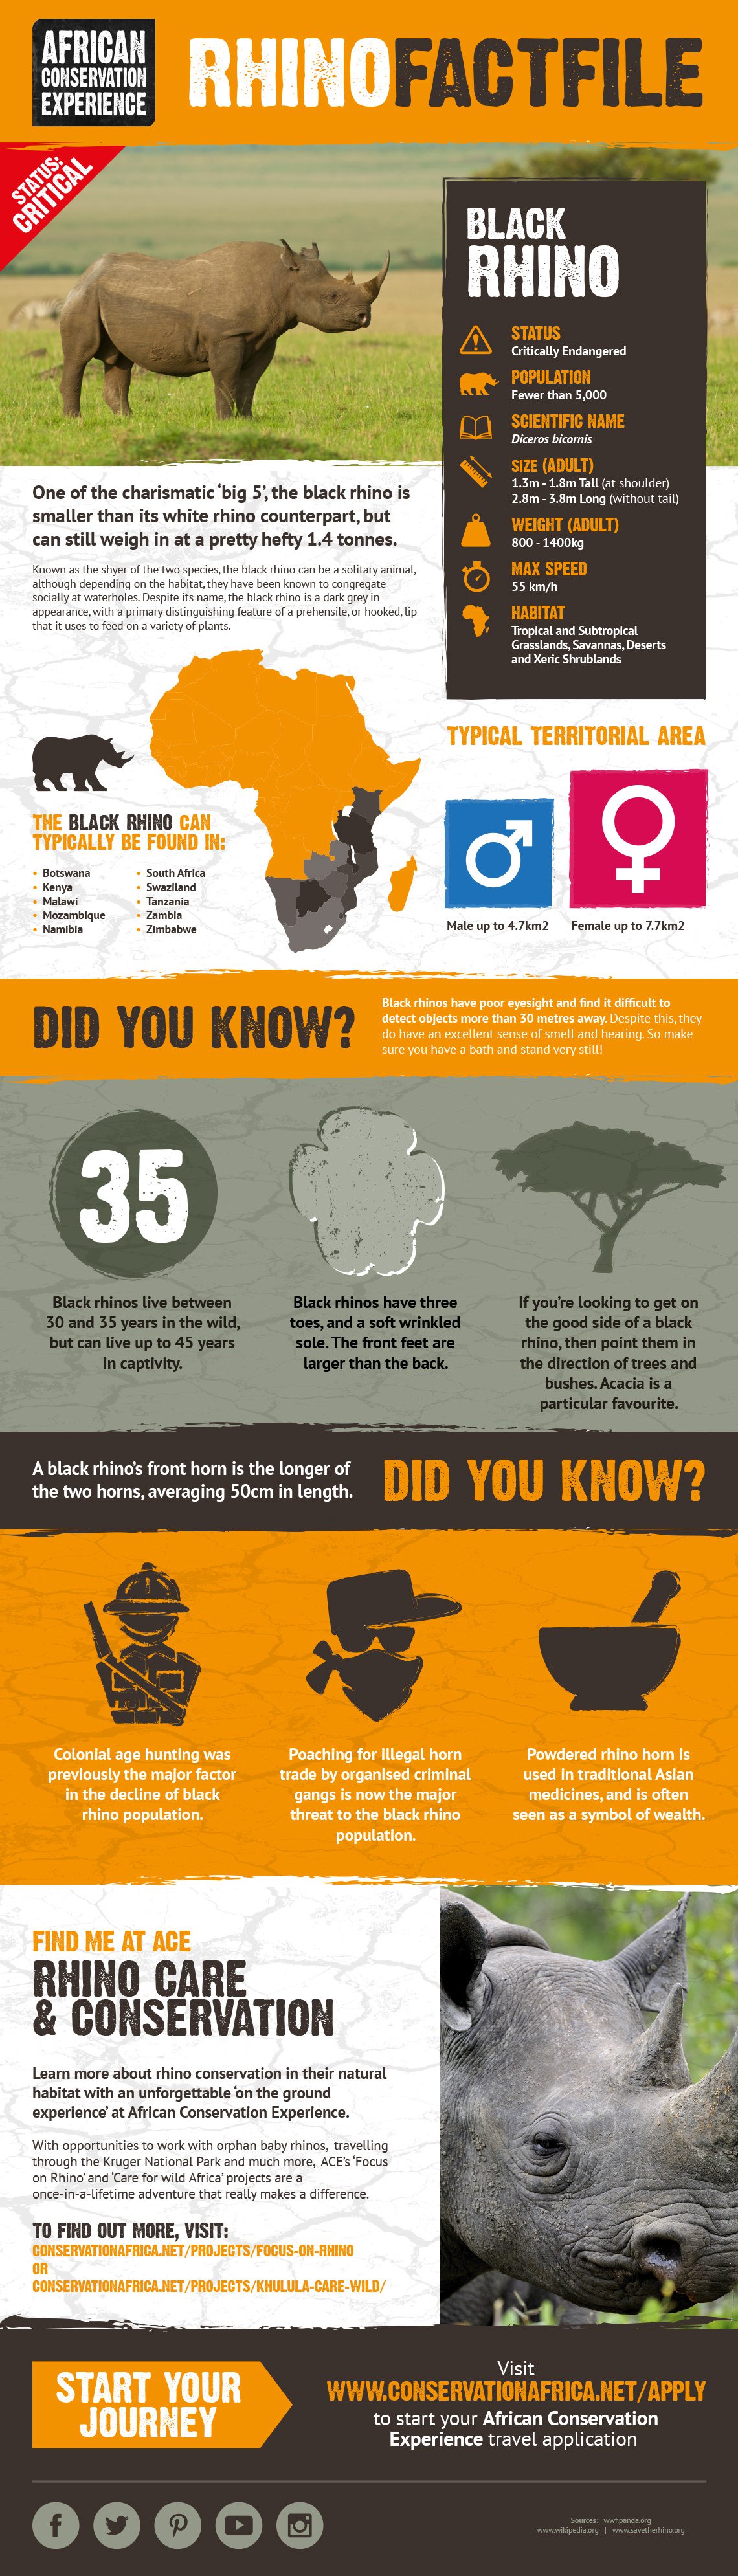 African Black Rhino: Some Eye-Opening Facts